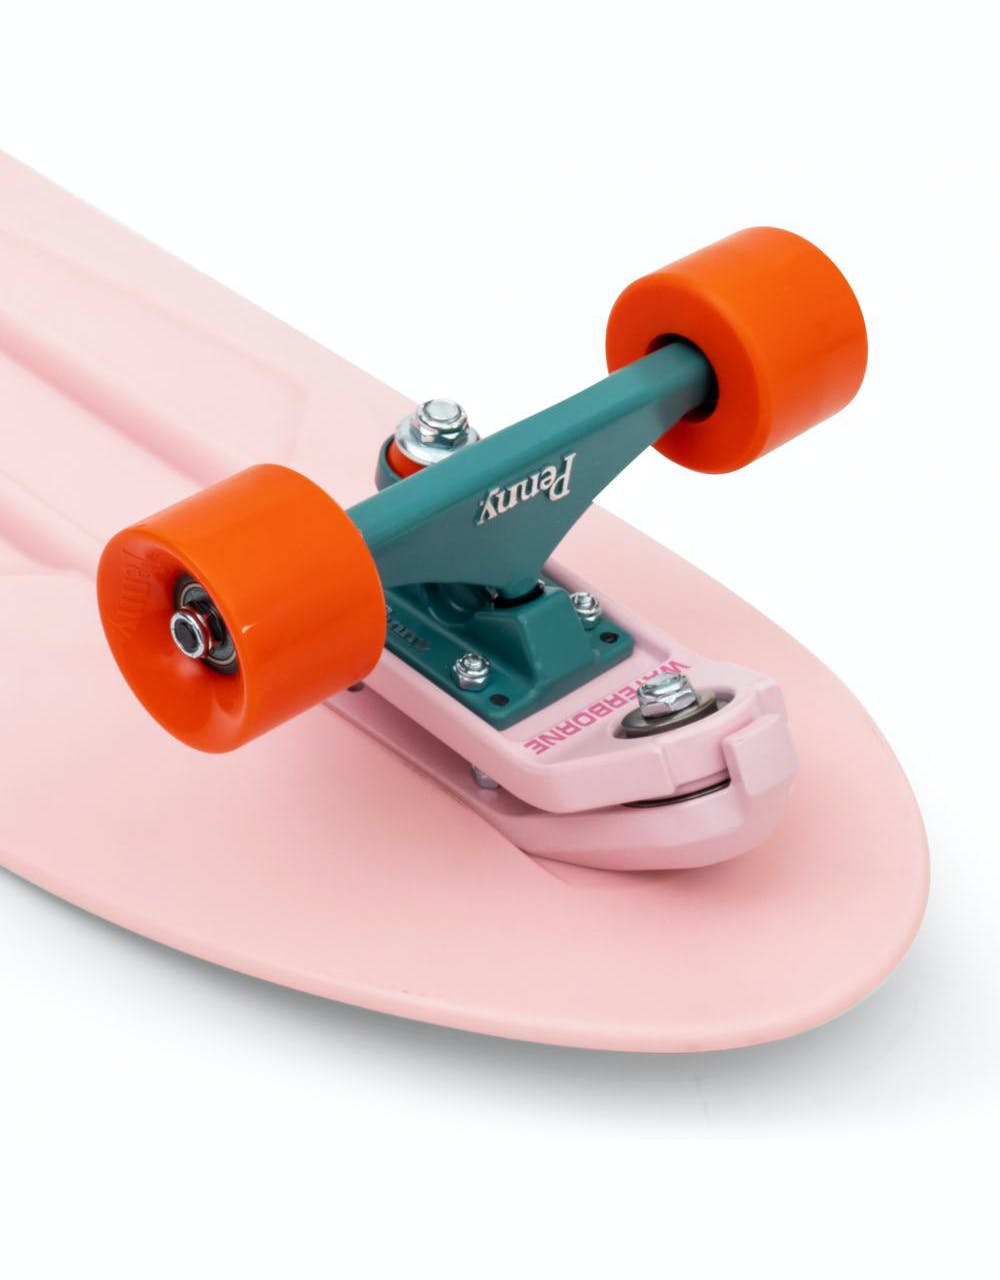 Penny Skateboards Surfskate Cruiser - 9" x 29" - Cactus Wanderlust